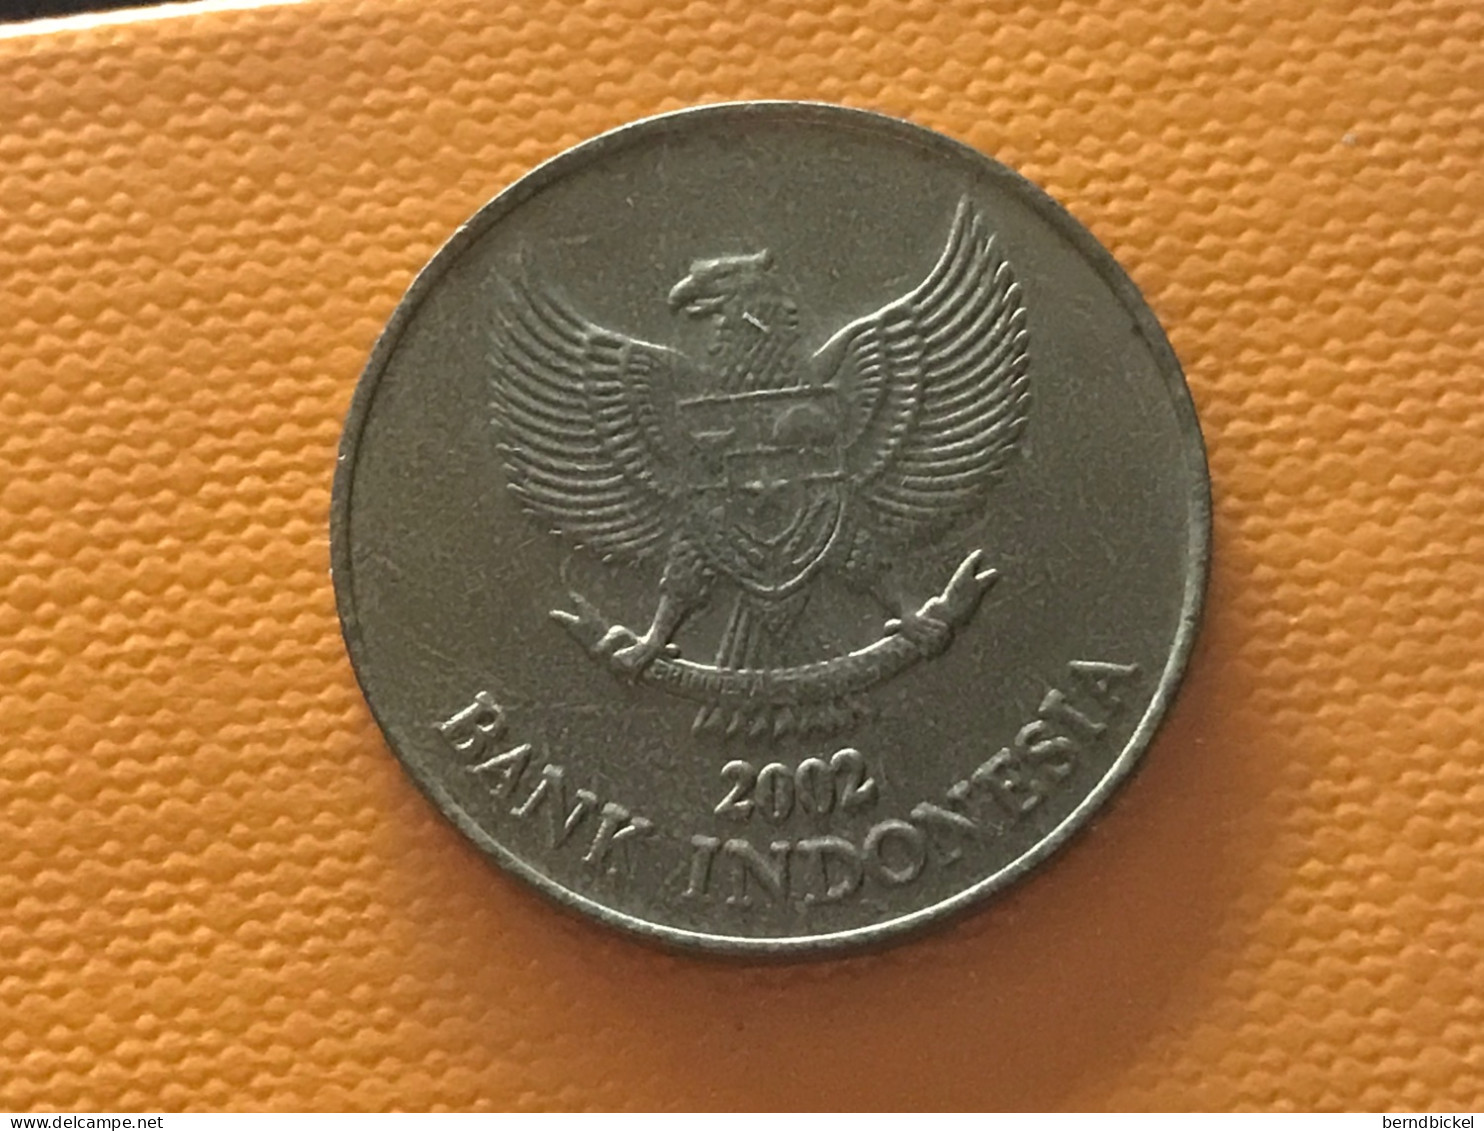 Münze Münzen Umlaufmünze Indonesien 500 Rupien 2002 - Indonesia